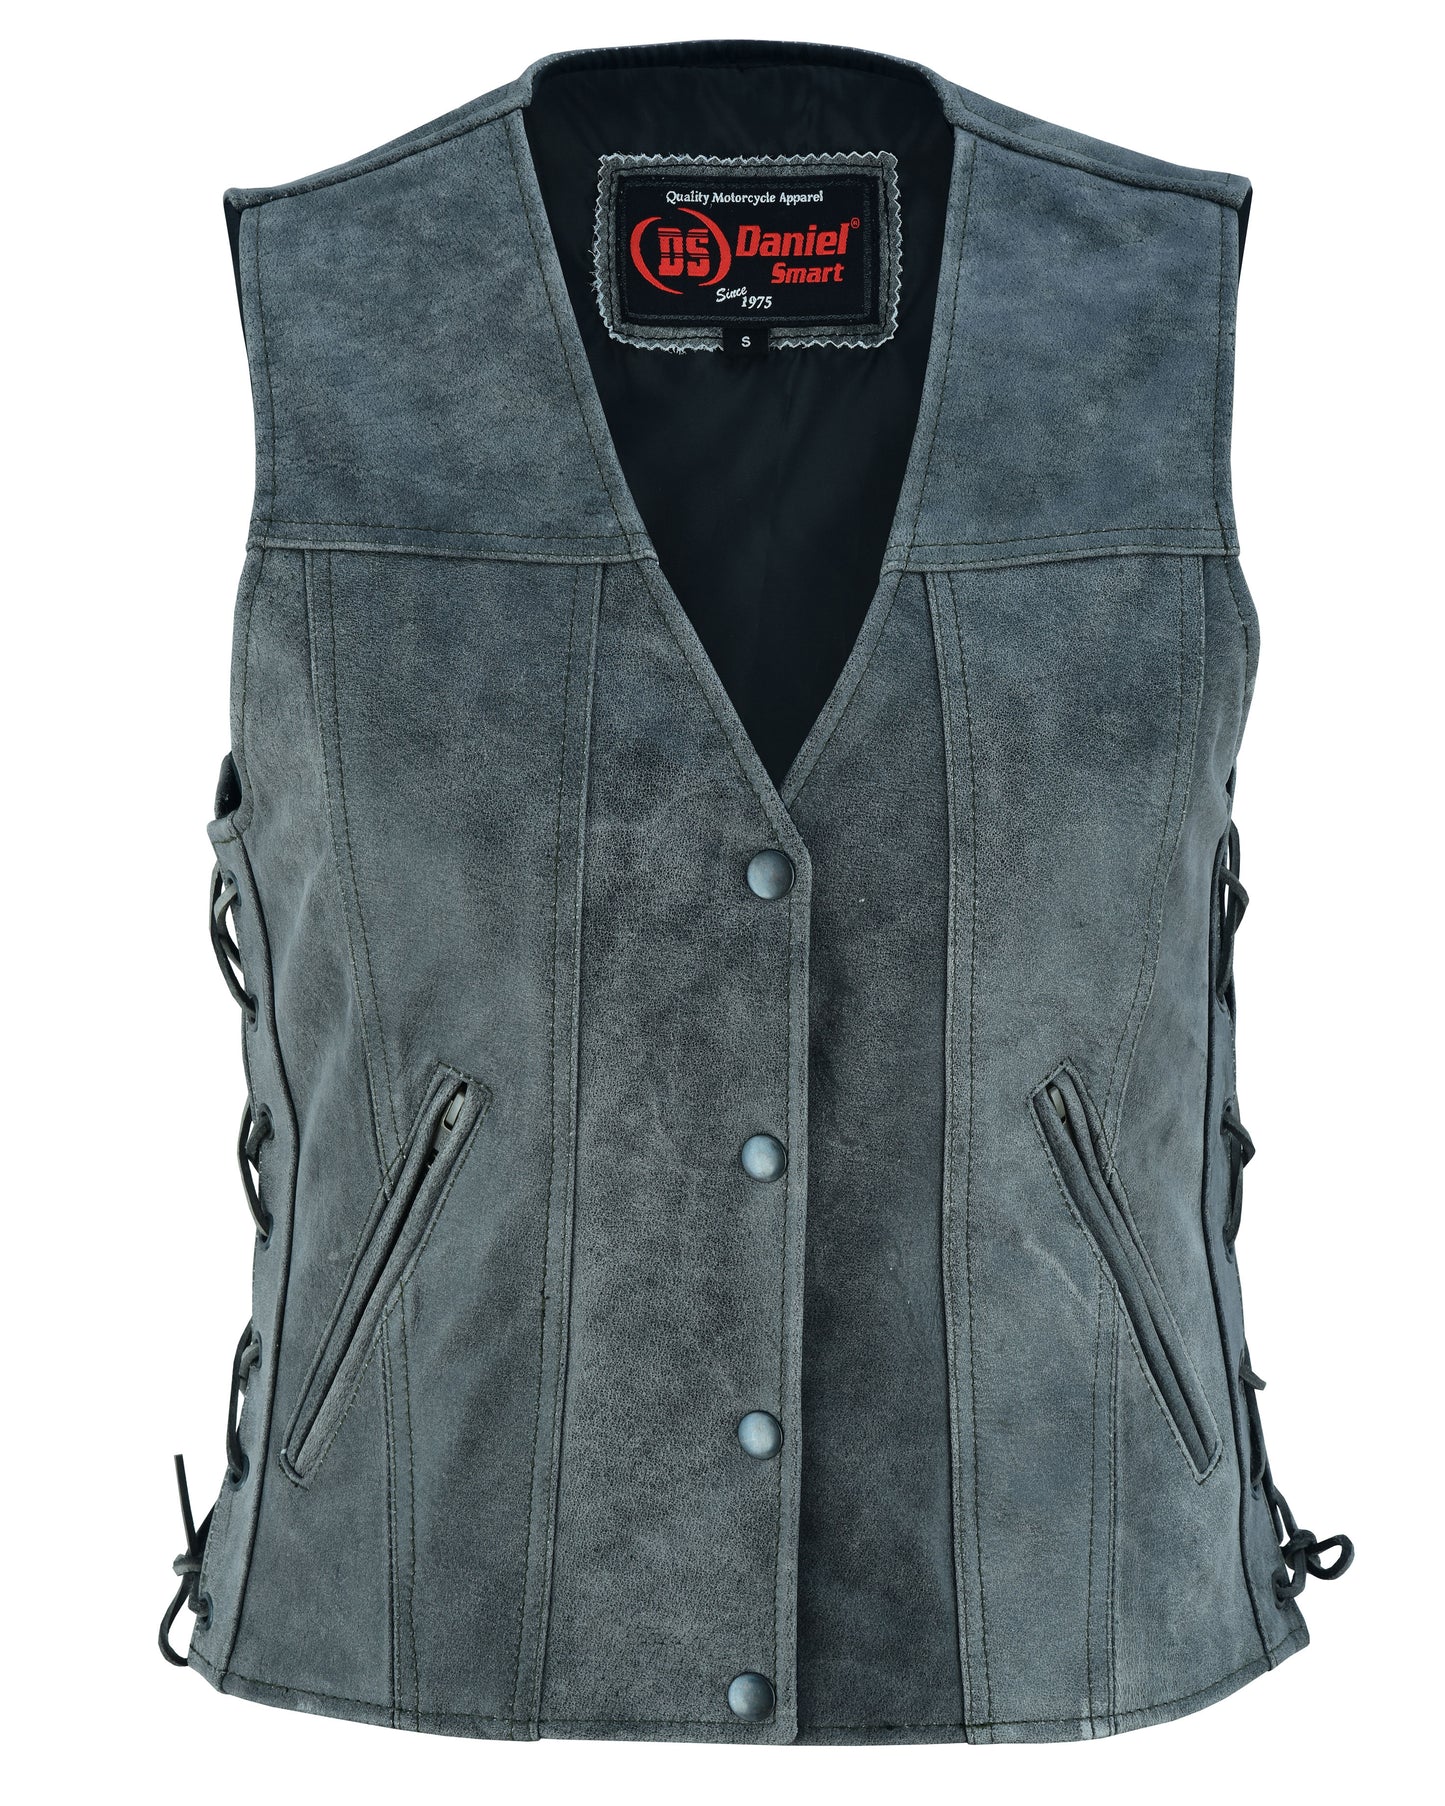 Women's Gray Single Back Panel Concealed Carry Vest